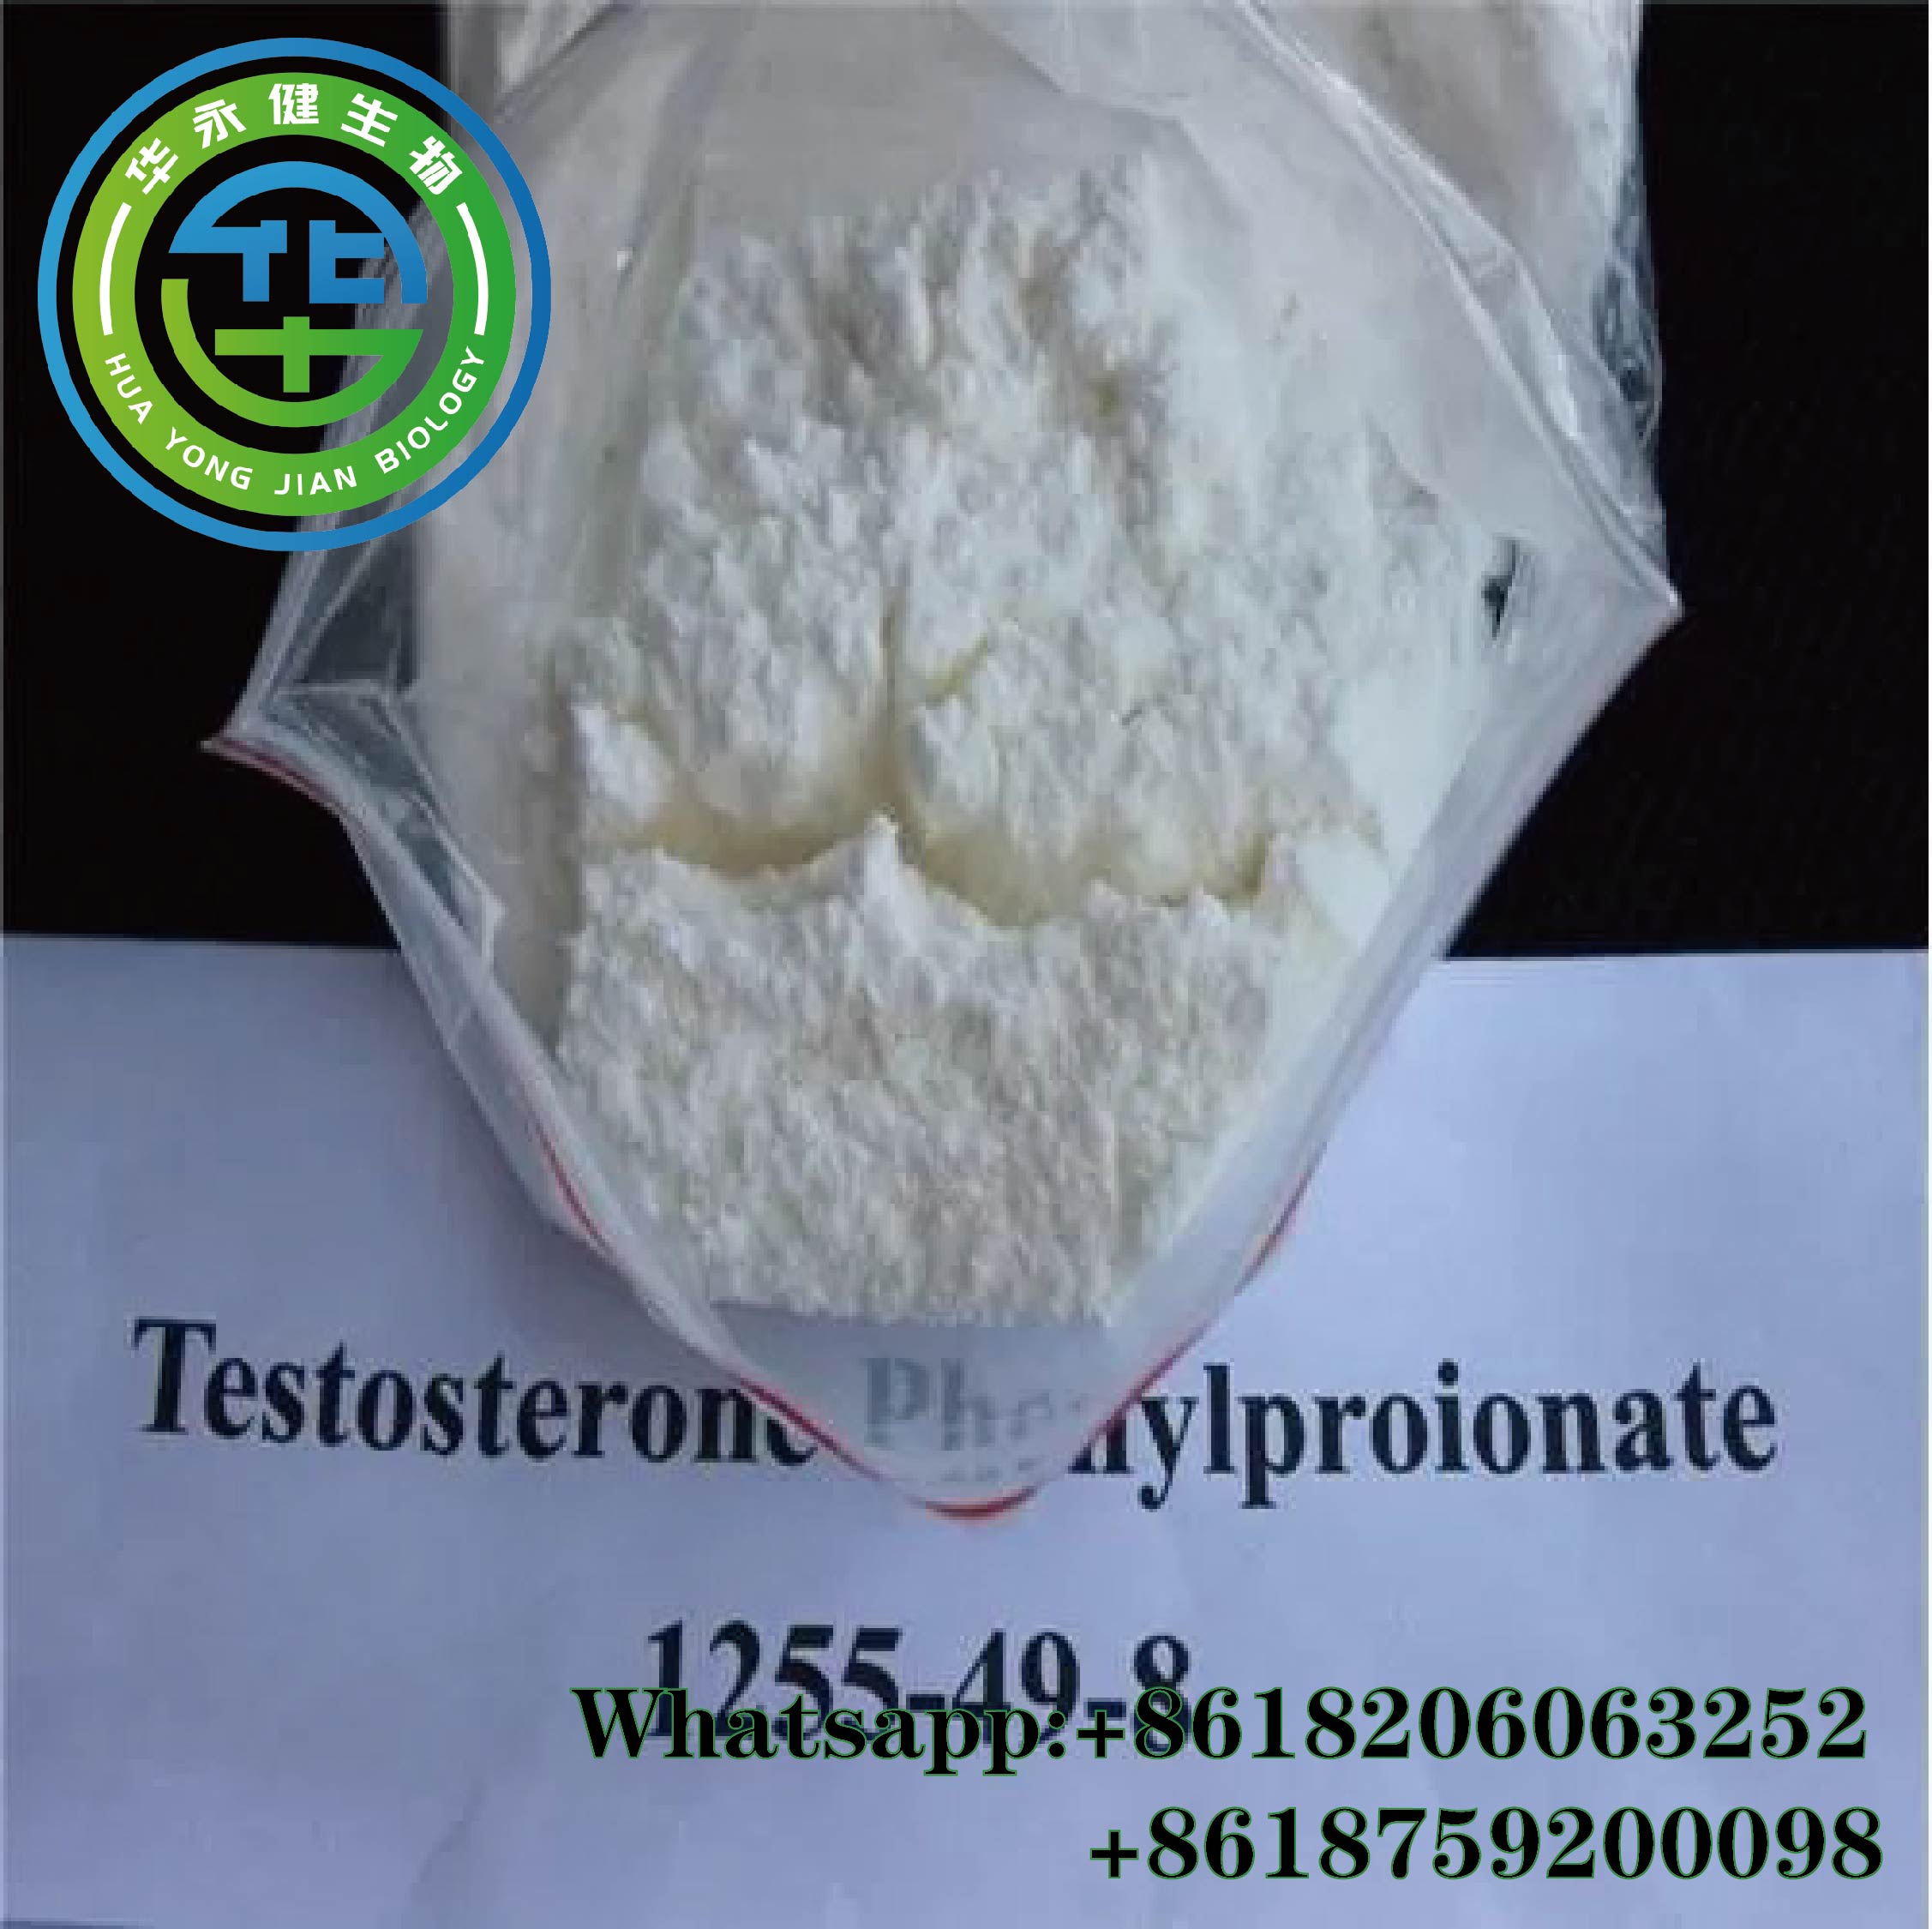 Testosterone Phenylpropionate Testosterone Steroid Hormone Retandrol TPP Steroid Powder Hormone CasNO.1255-49-8 